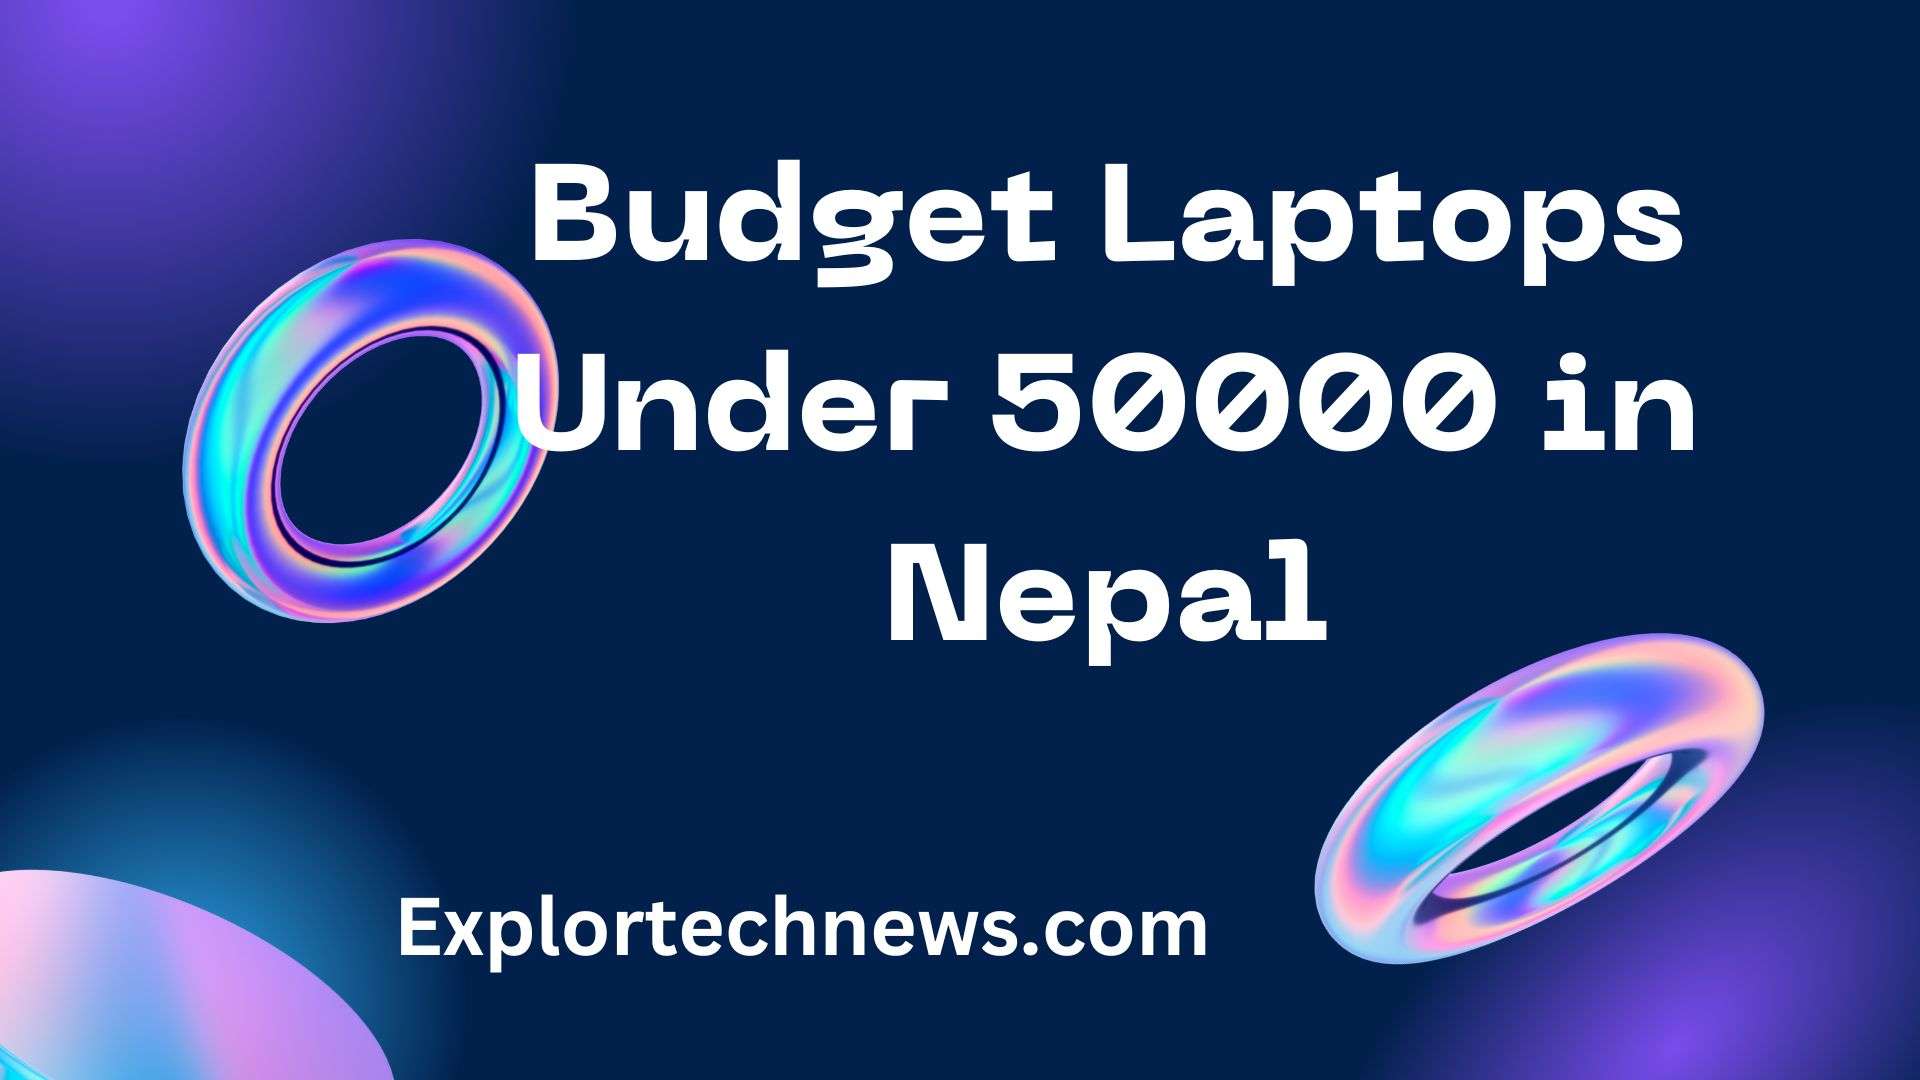 Budget Laptops Under 50000 in Nepal